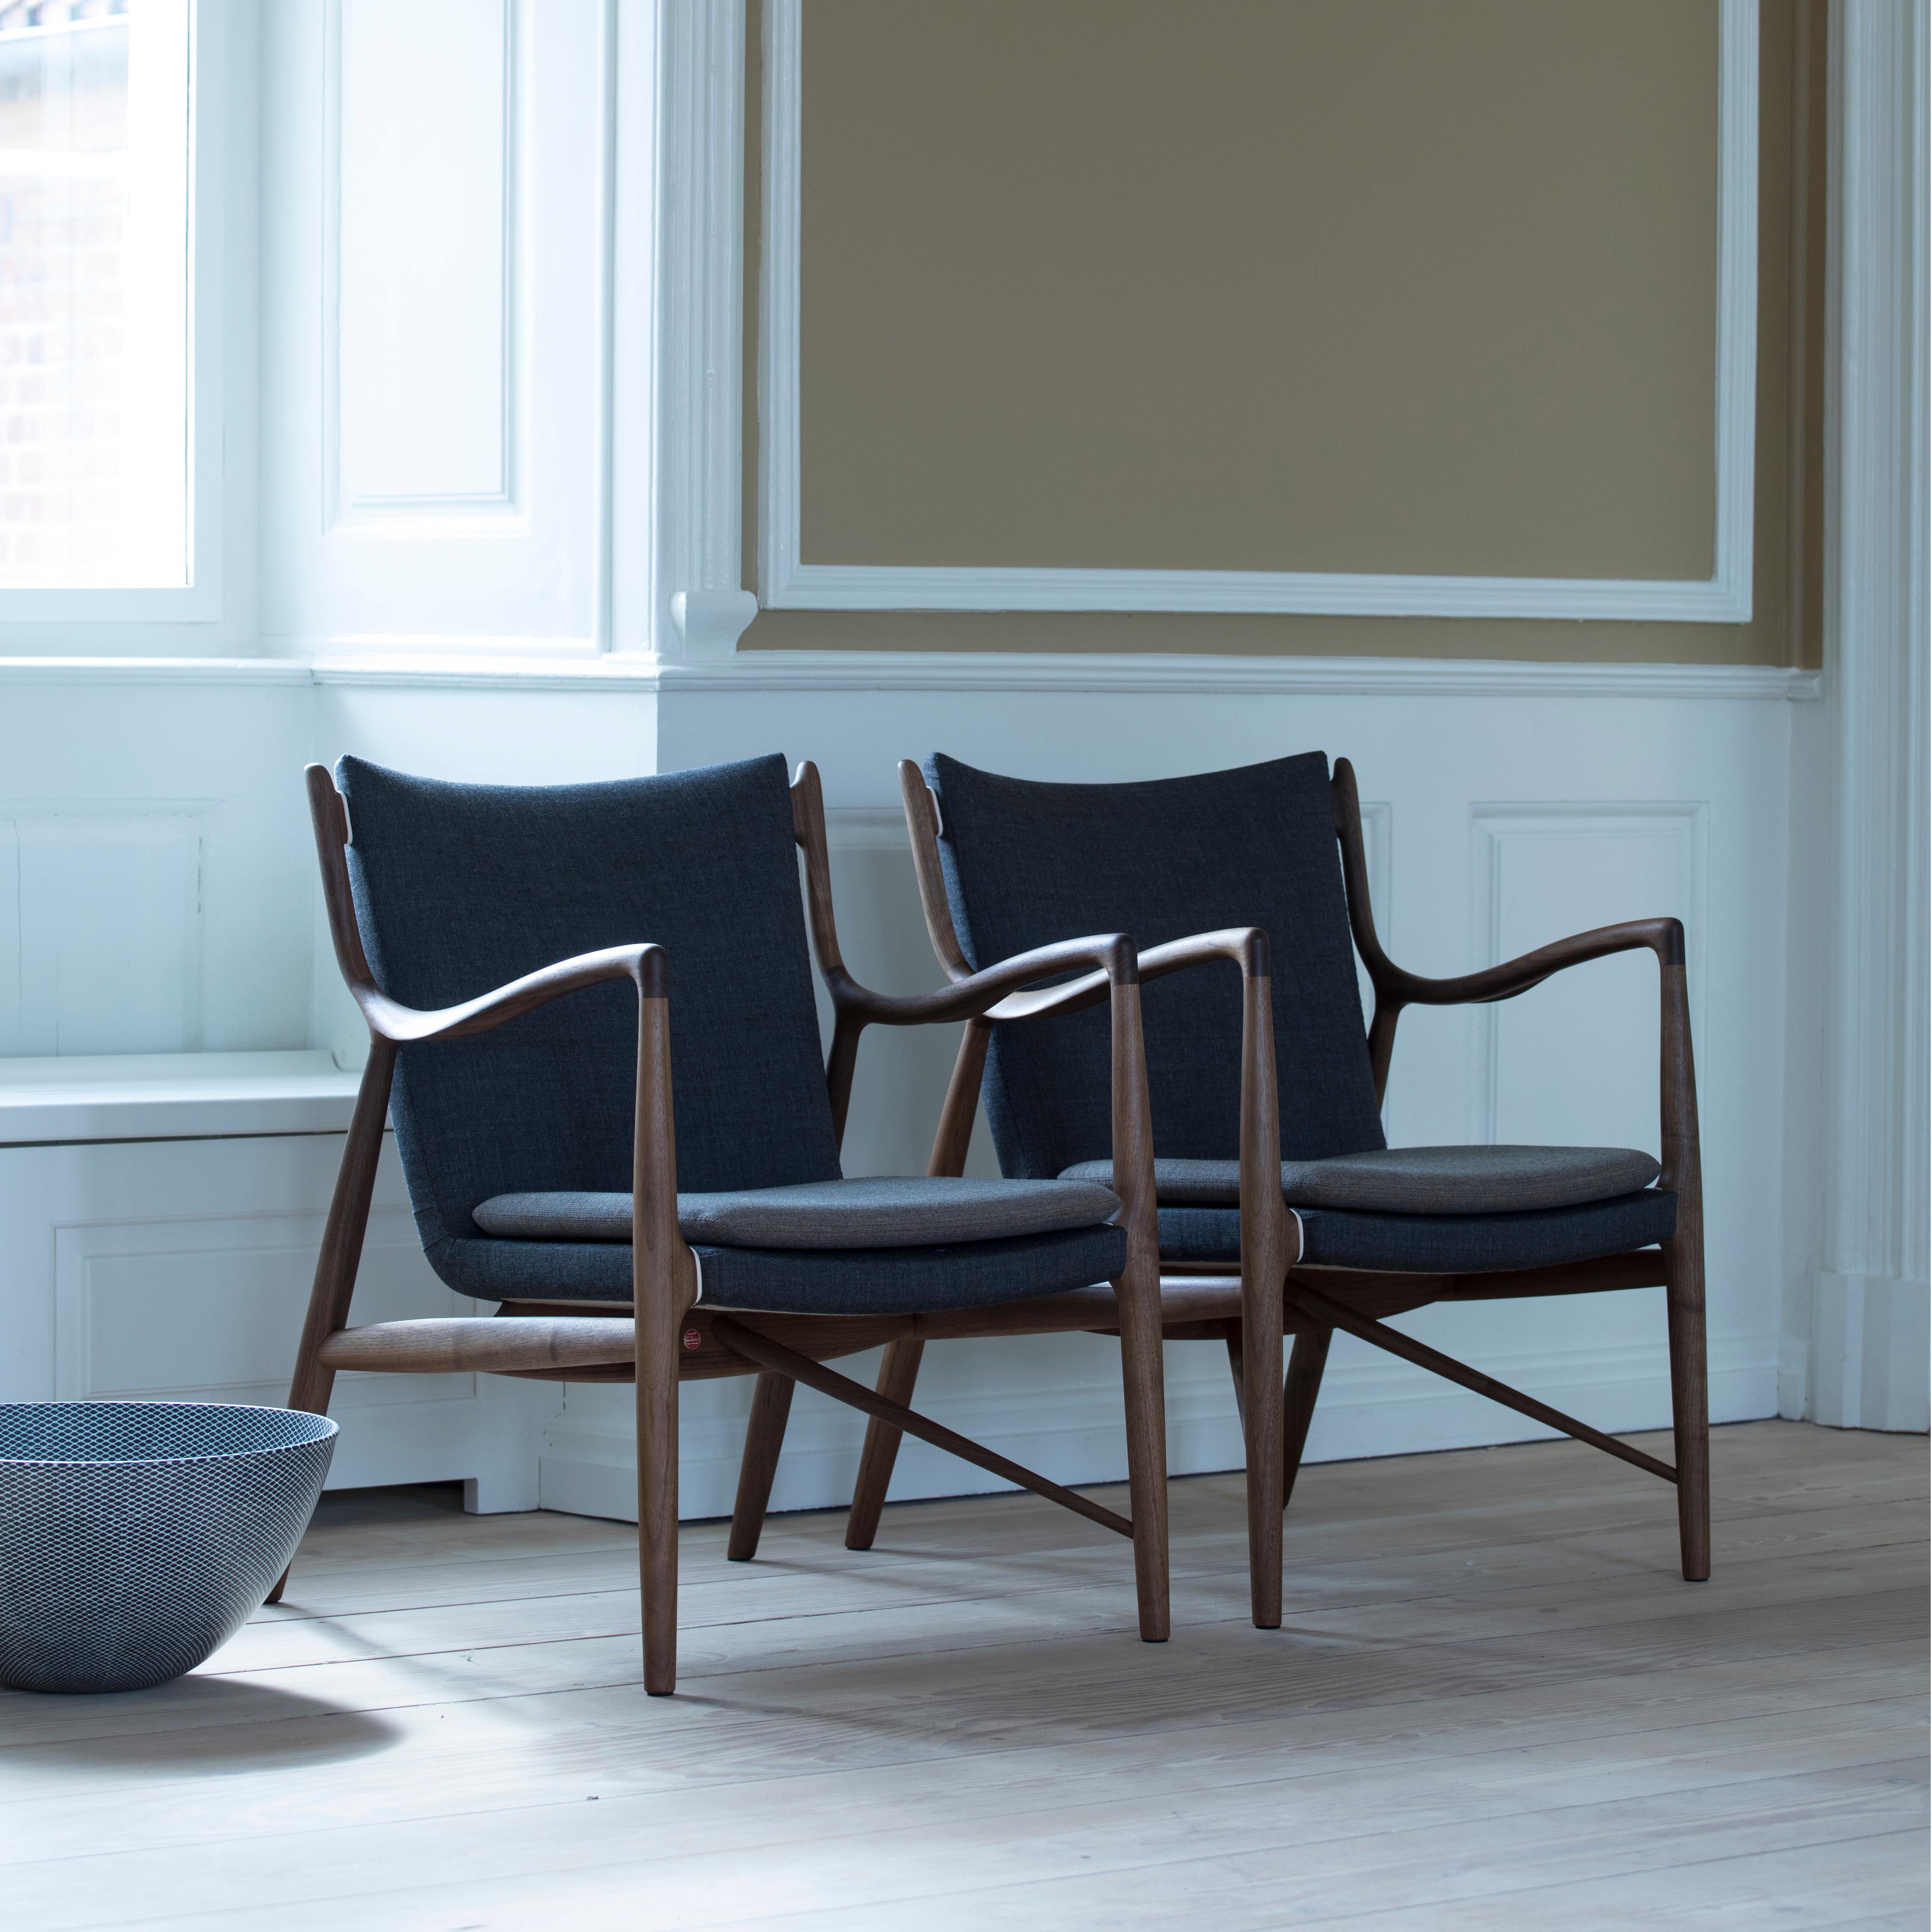 Finn Juhl 45 Chair, Wood and Fuse Fabric 2